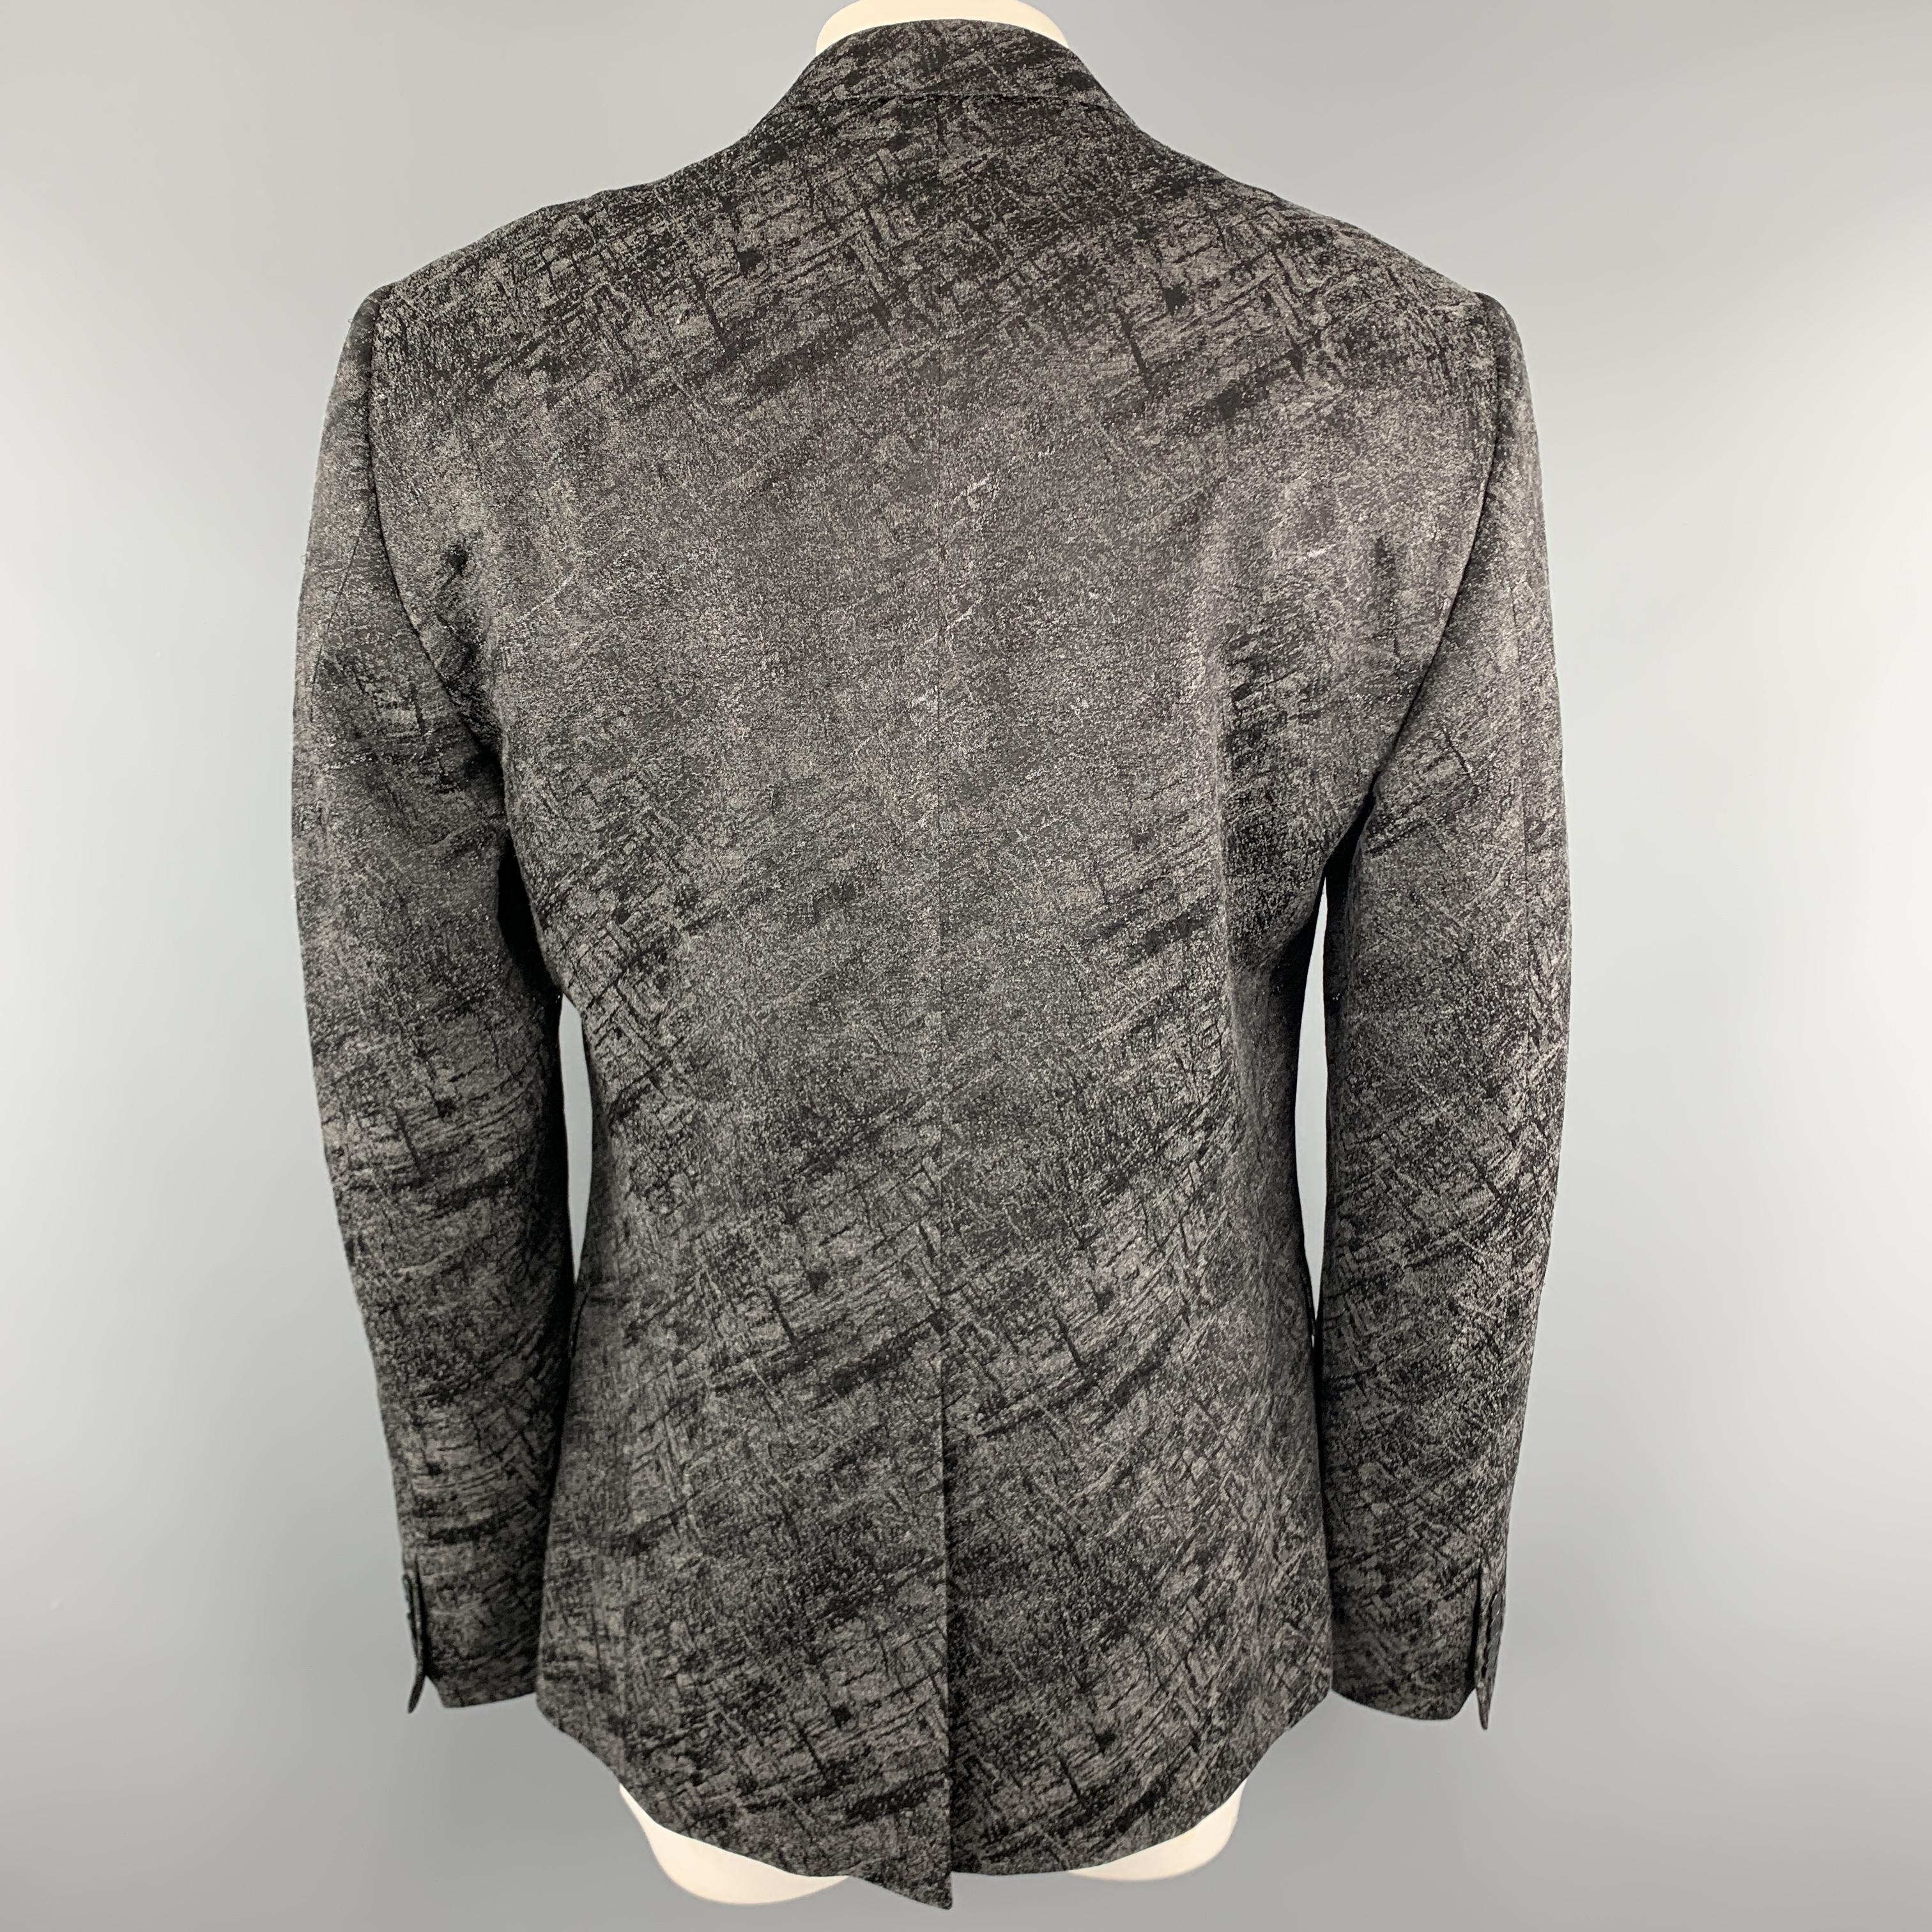 Men's VERSACE COLLECTION Size 50 Charcoal & Black Metallic Print Sport Coat